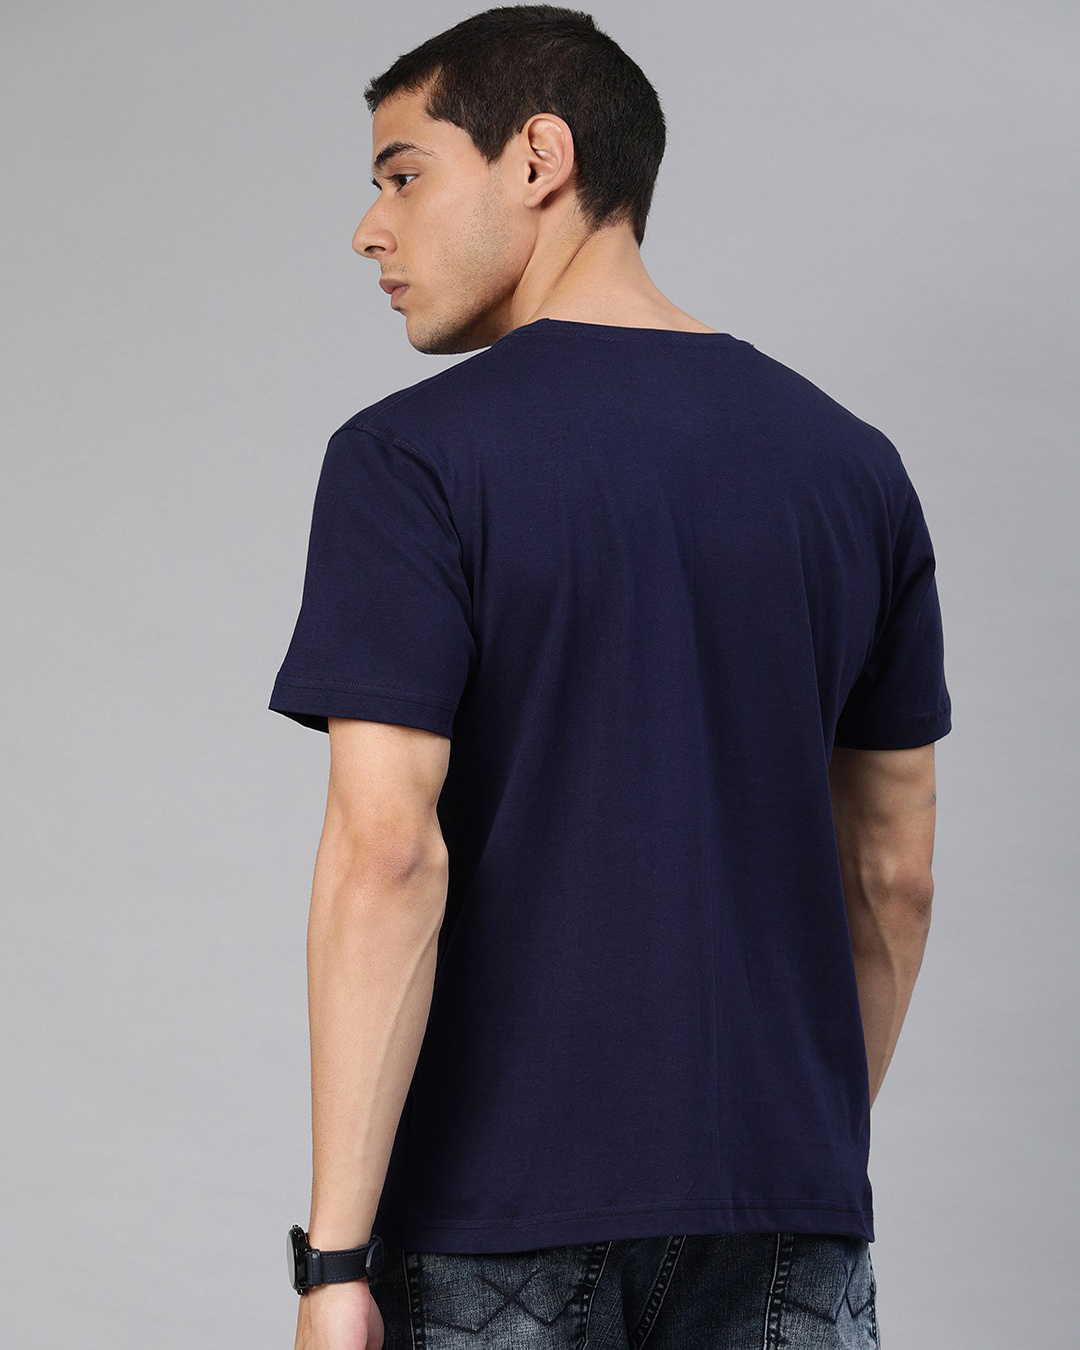 Shop Engineering Ne Laga Di Half Sleeve T Shirt For Men-Back